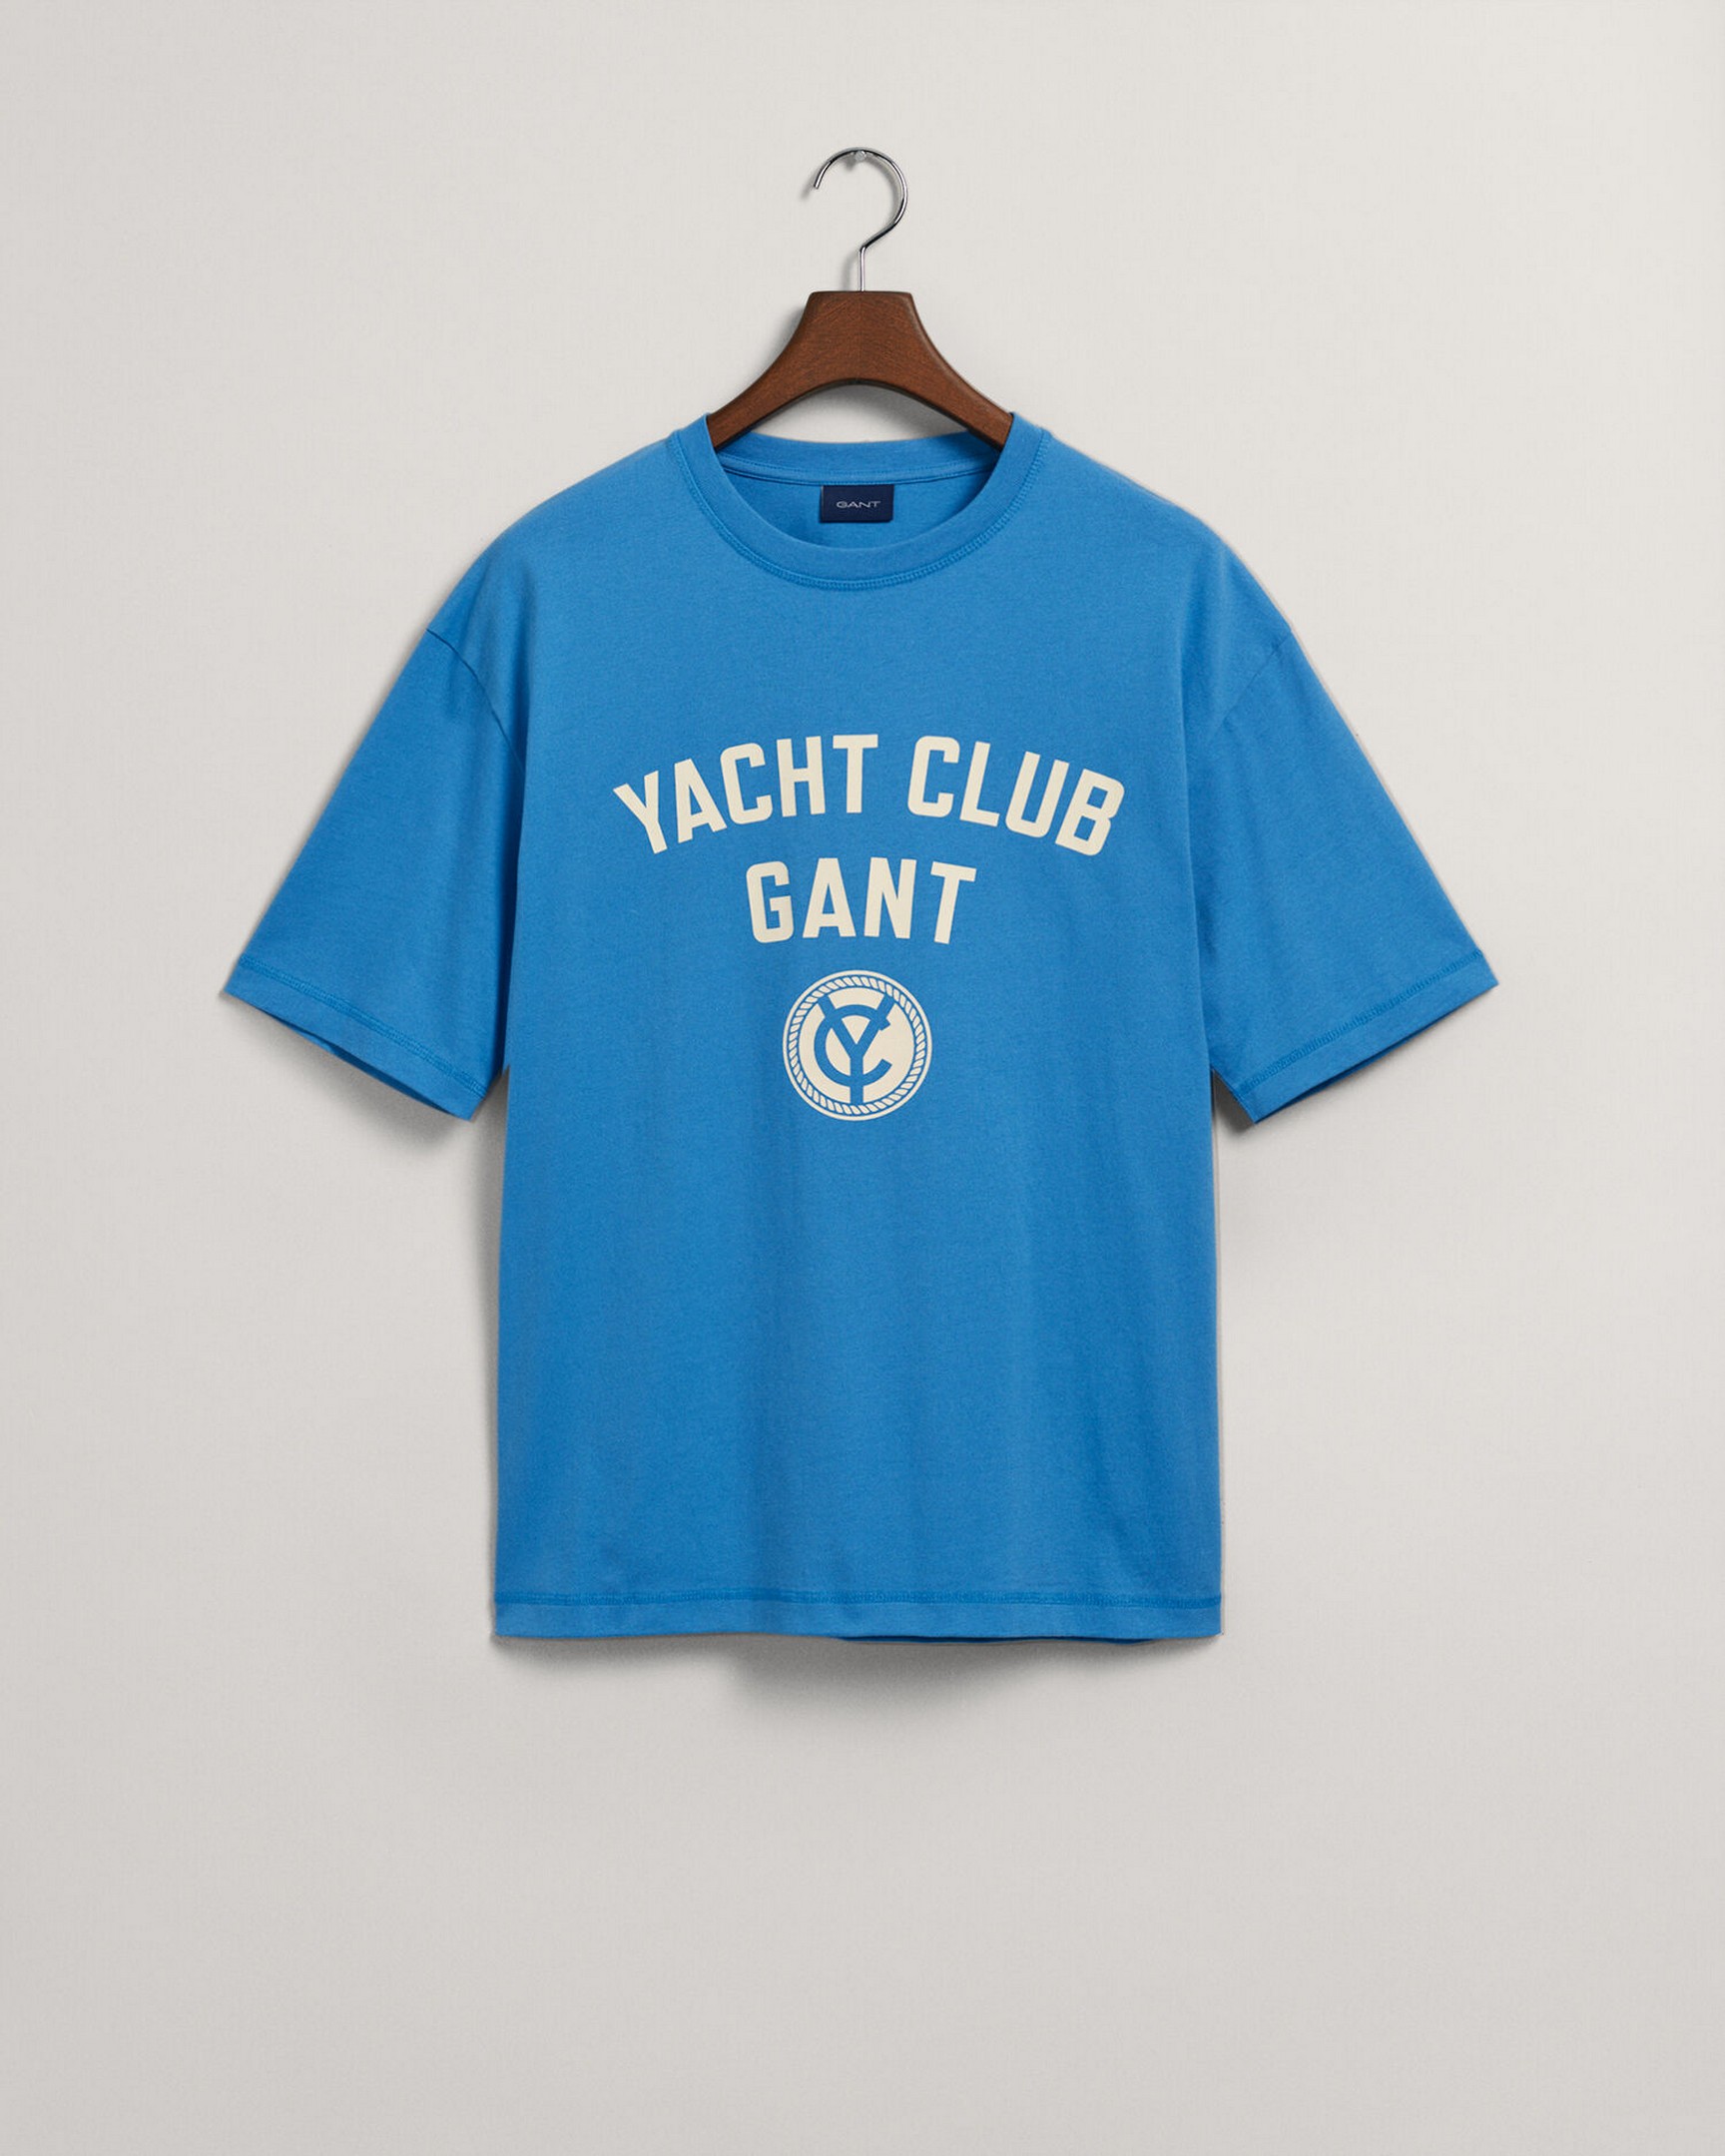 Yacht Club Shirt T-Shirt Day | Jan Rozing Men's Fashion